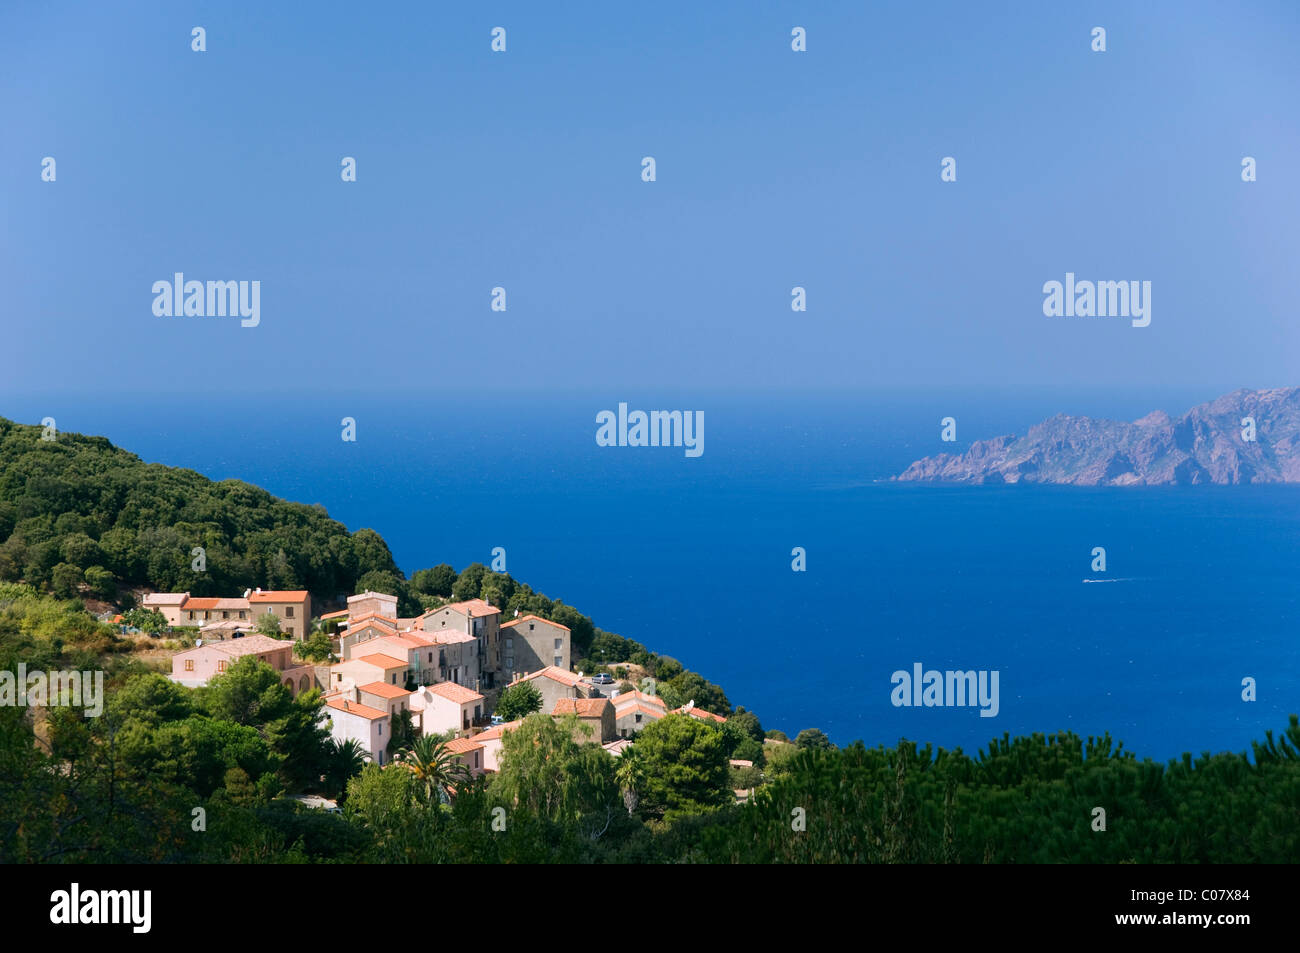 Piana mountain village overlooking the sea, Calanche de Piana, Gulf of Porto, Corsica, France, Europe Stock Photo